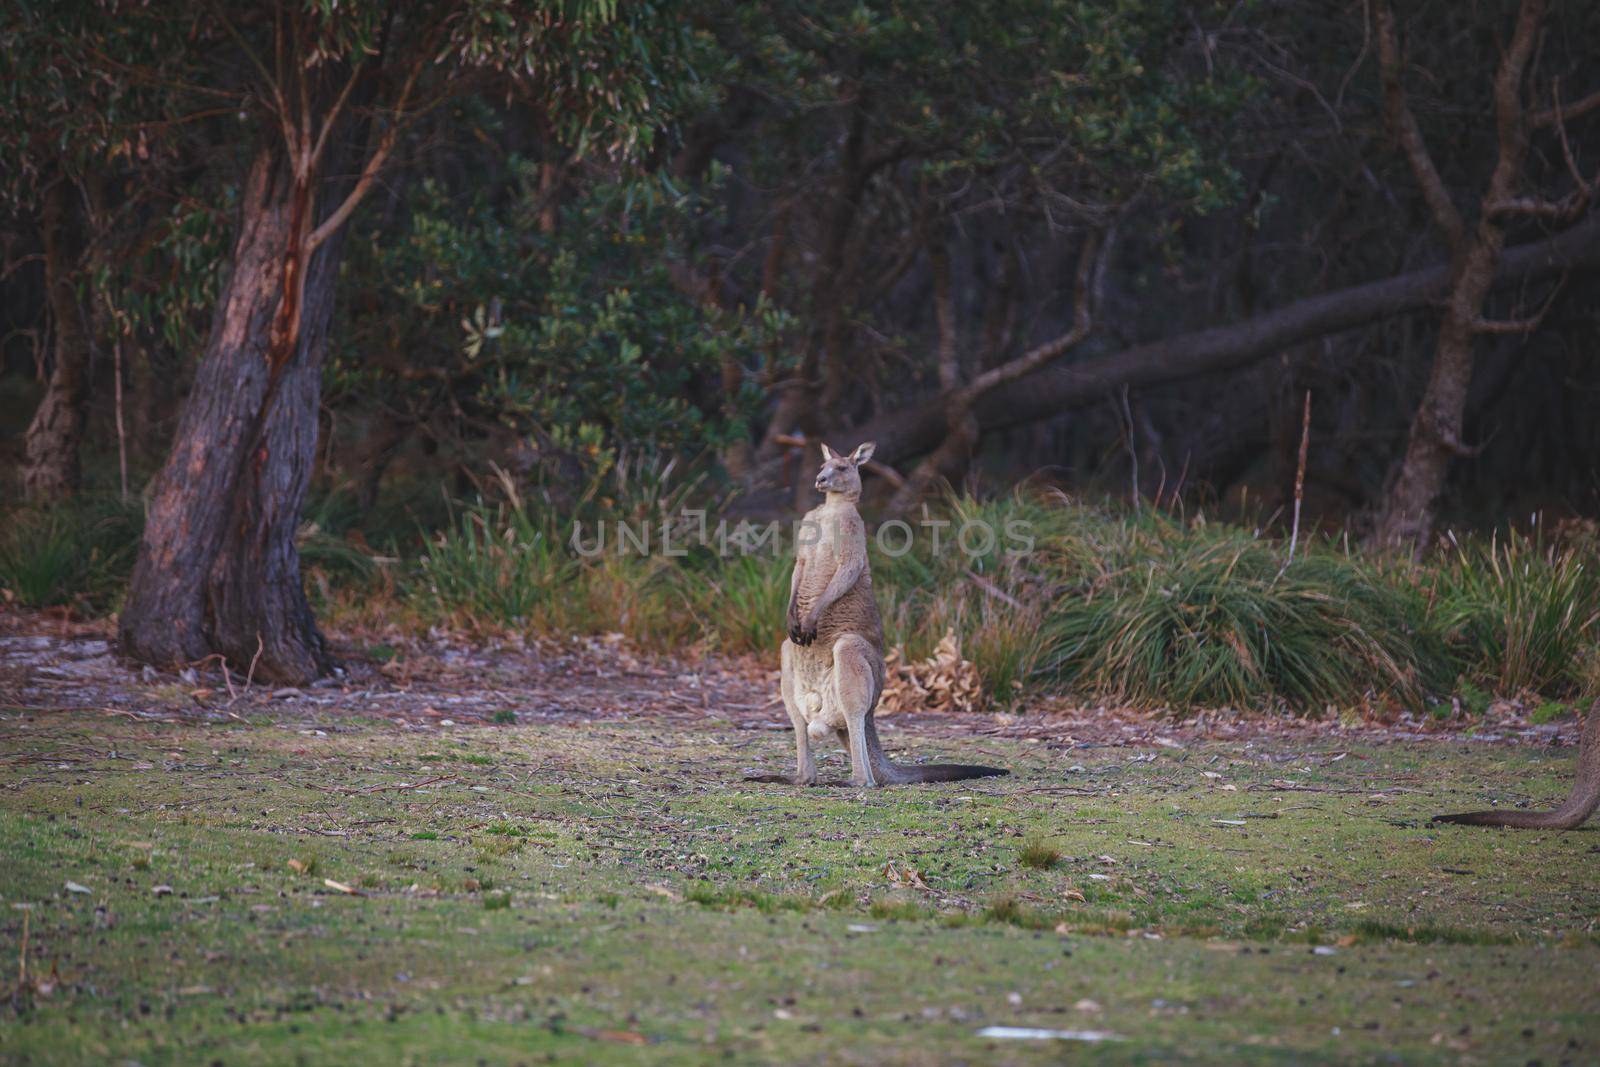 Female Eastern Grey Kangaroo with her Joey. High quality photo